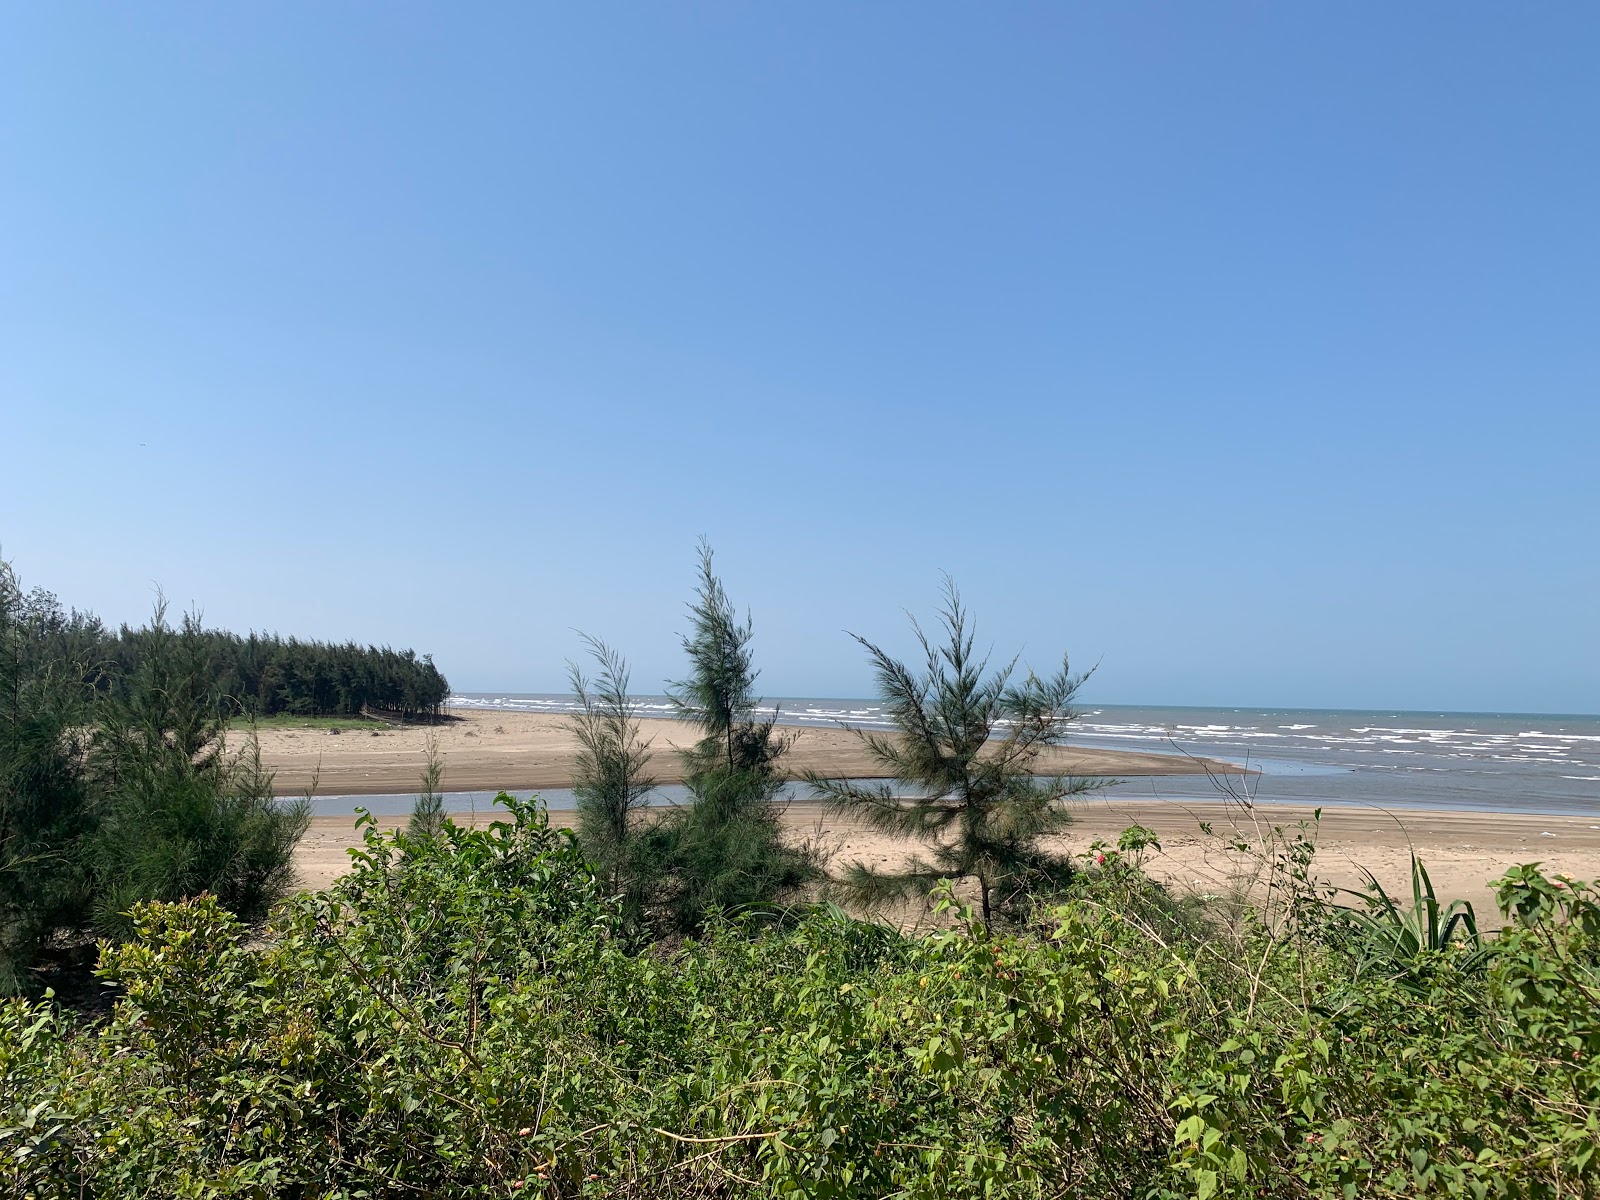 Foto di Cua Hien Beach con una superficie del sabbia luminosa